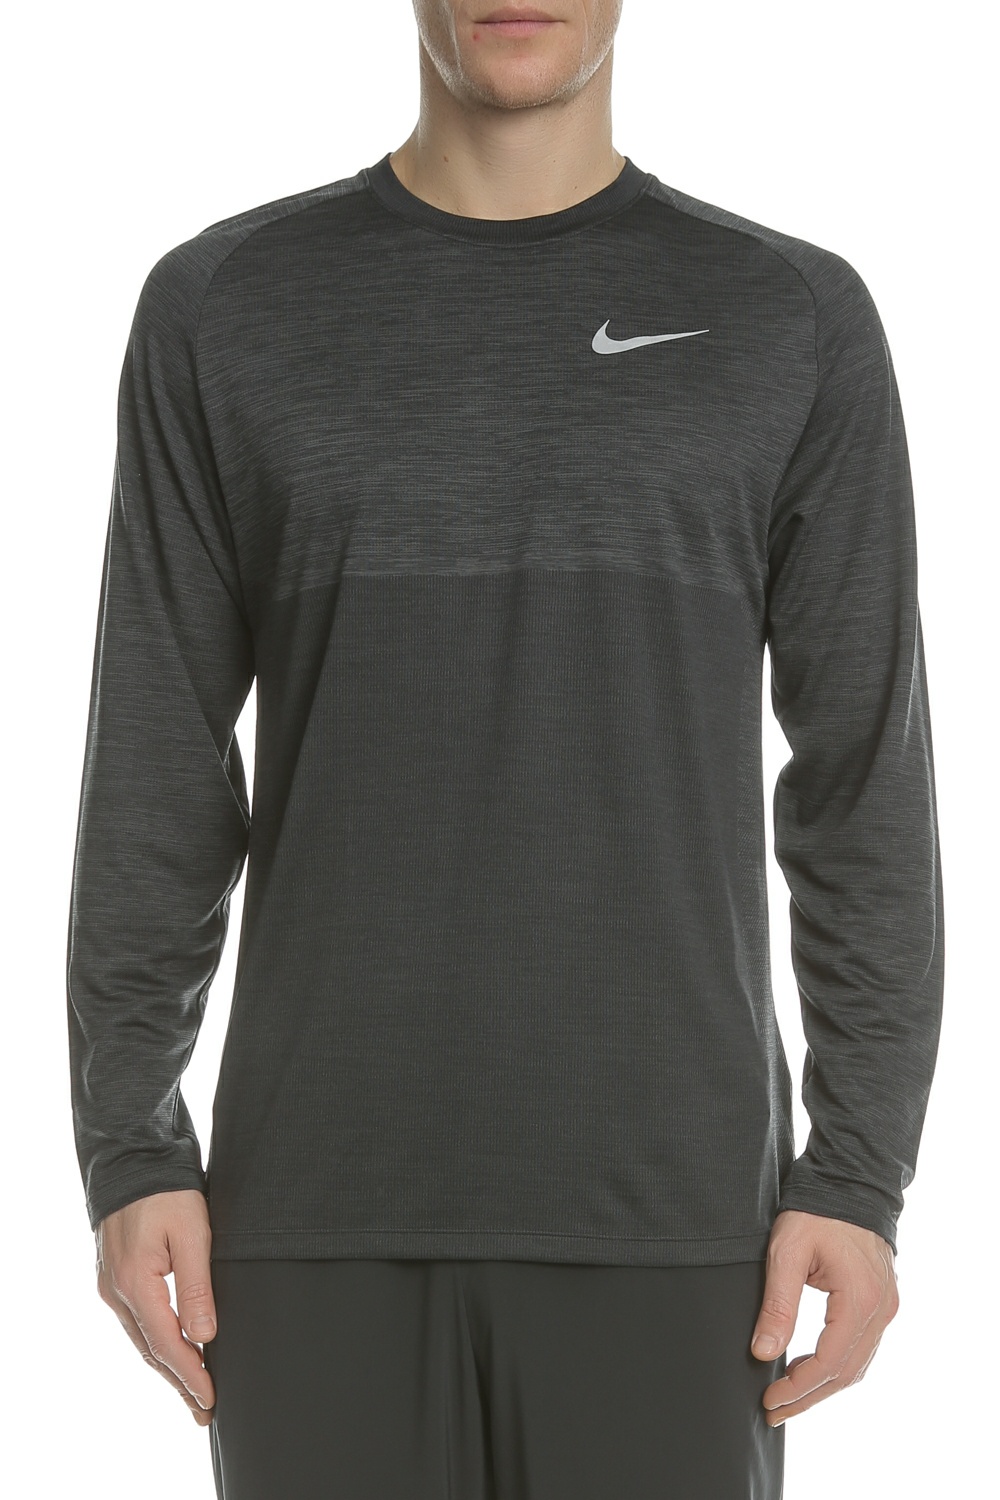 NIKE - Ανδρική μακρυμάνικη μπλούζα Nike DRY MEDALIST TOP LS ανθρακί Ανδρικά/Ρούχα/Αθλητικά/Φούτερ-Μακρυμάνικα